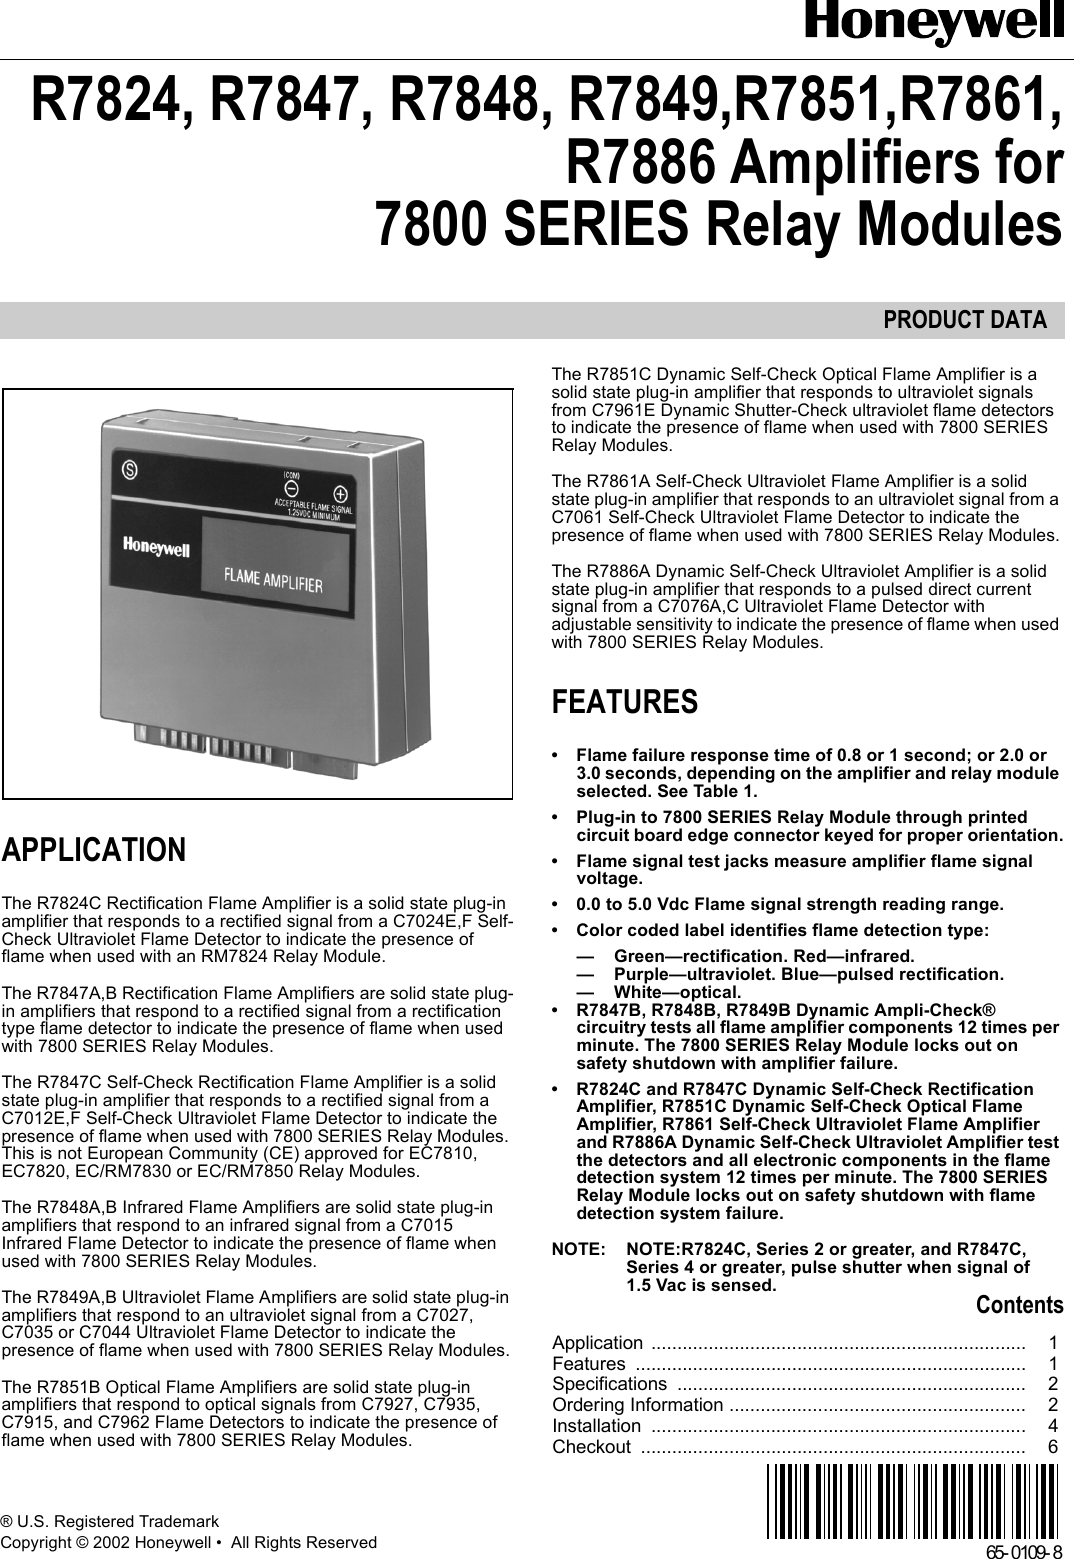 Page 1 of 8 - Honeywell Honeywell-Honeywell-Thermostat-R7847-Users-Manual- 65-0109 - R7824, R7847, R7848, R7849,R7851,R7861, R7886 Amplifiers Fir 7800 SERIES Relay Es  Honeywell-honeywell-thermostat-r7847-users-manual